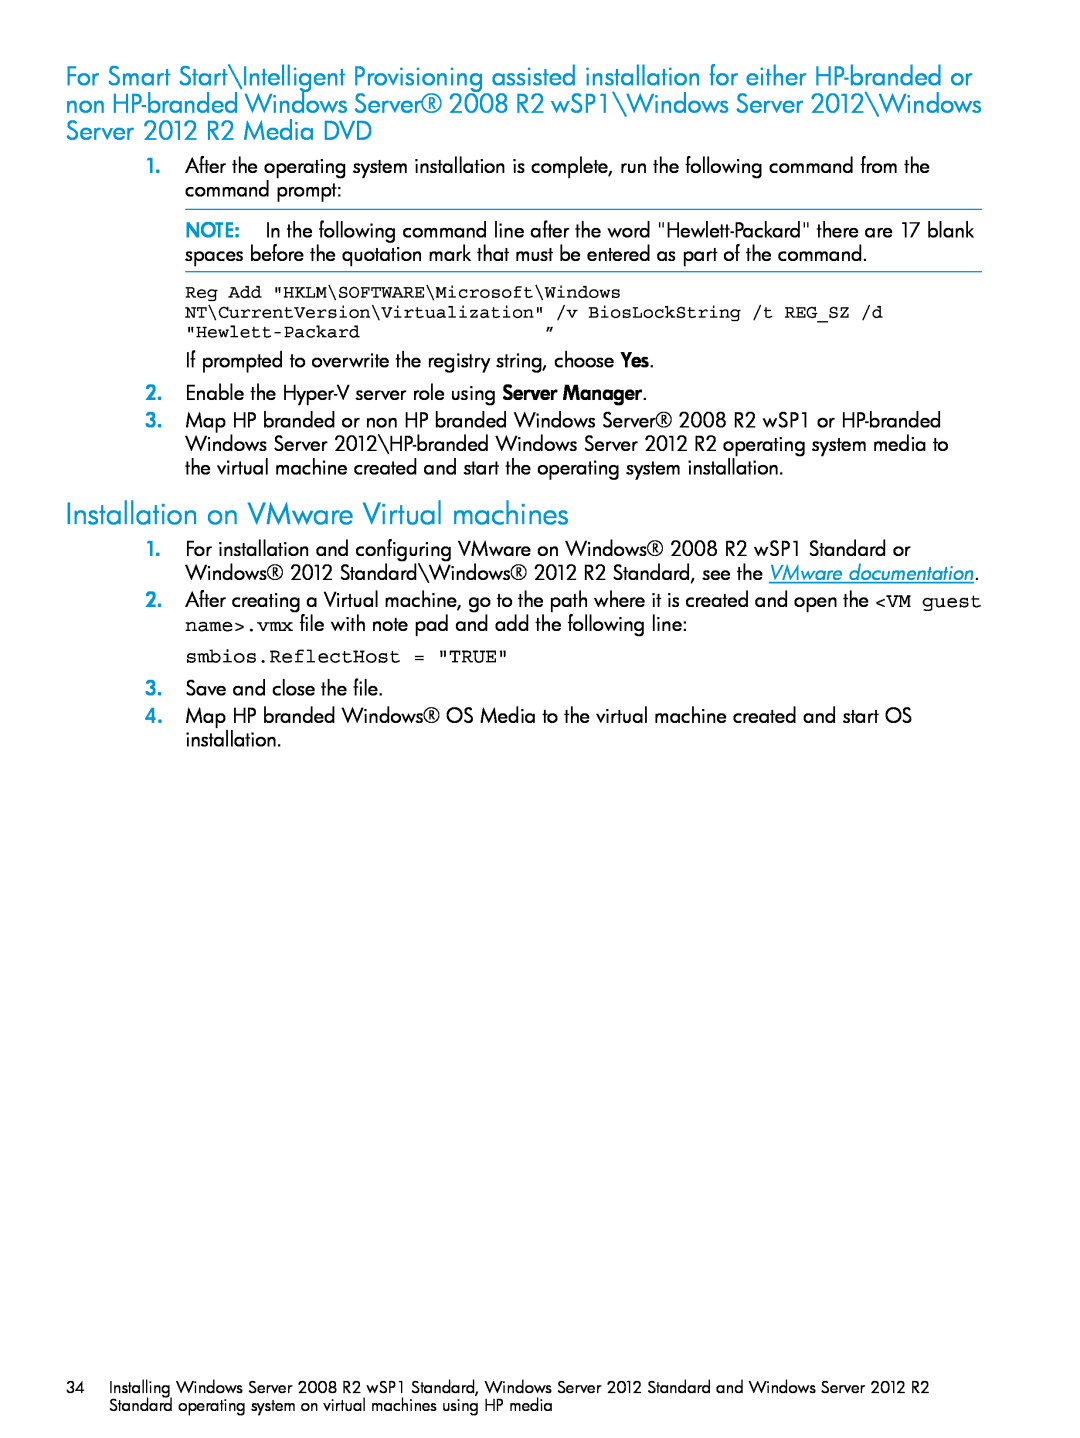 HP Microsoft Windows Server 2012 manual Installation on VMware Virtual machines, smbios.ReflectHost = TRUE 